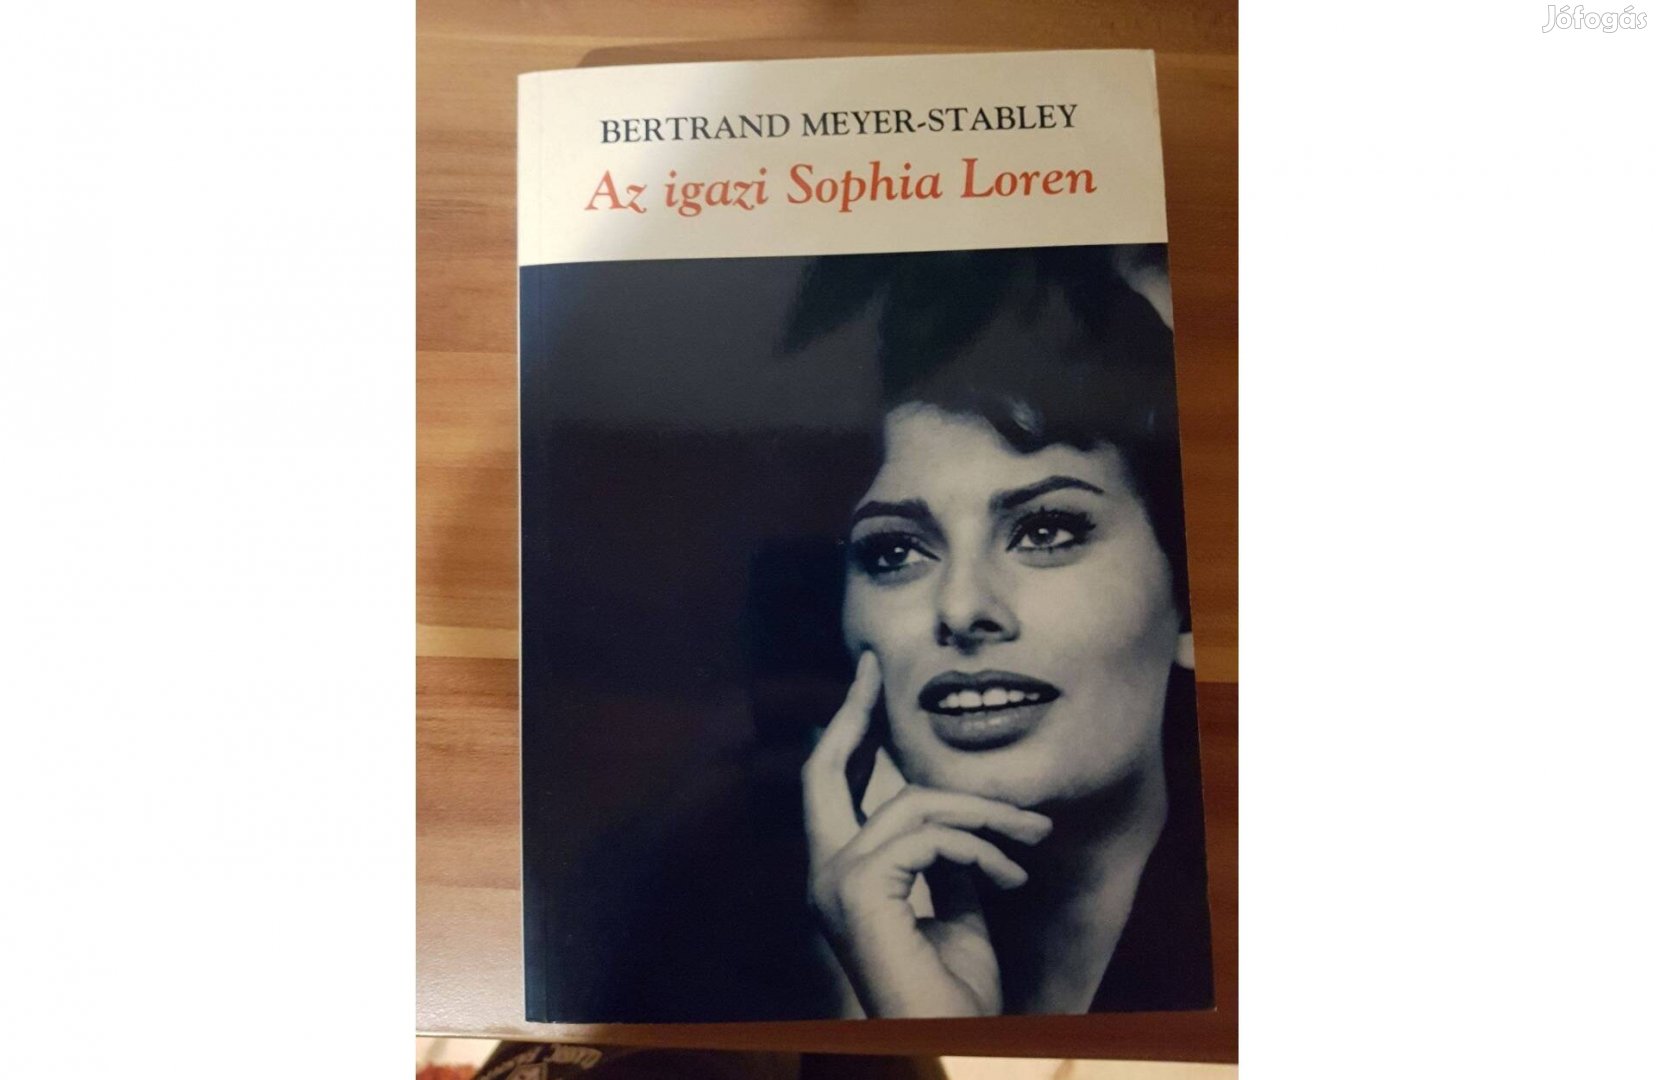 Bertrand Meyer-Stabley: Az igazi Sophia Loren